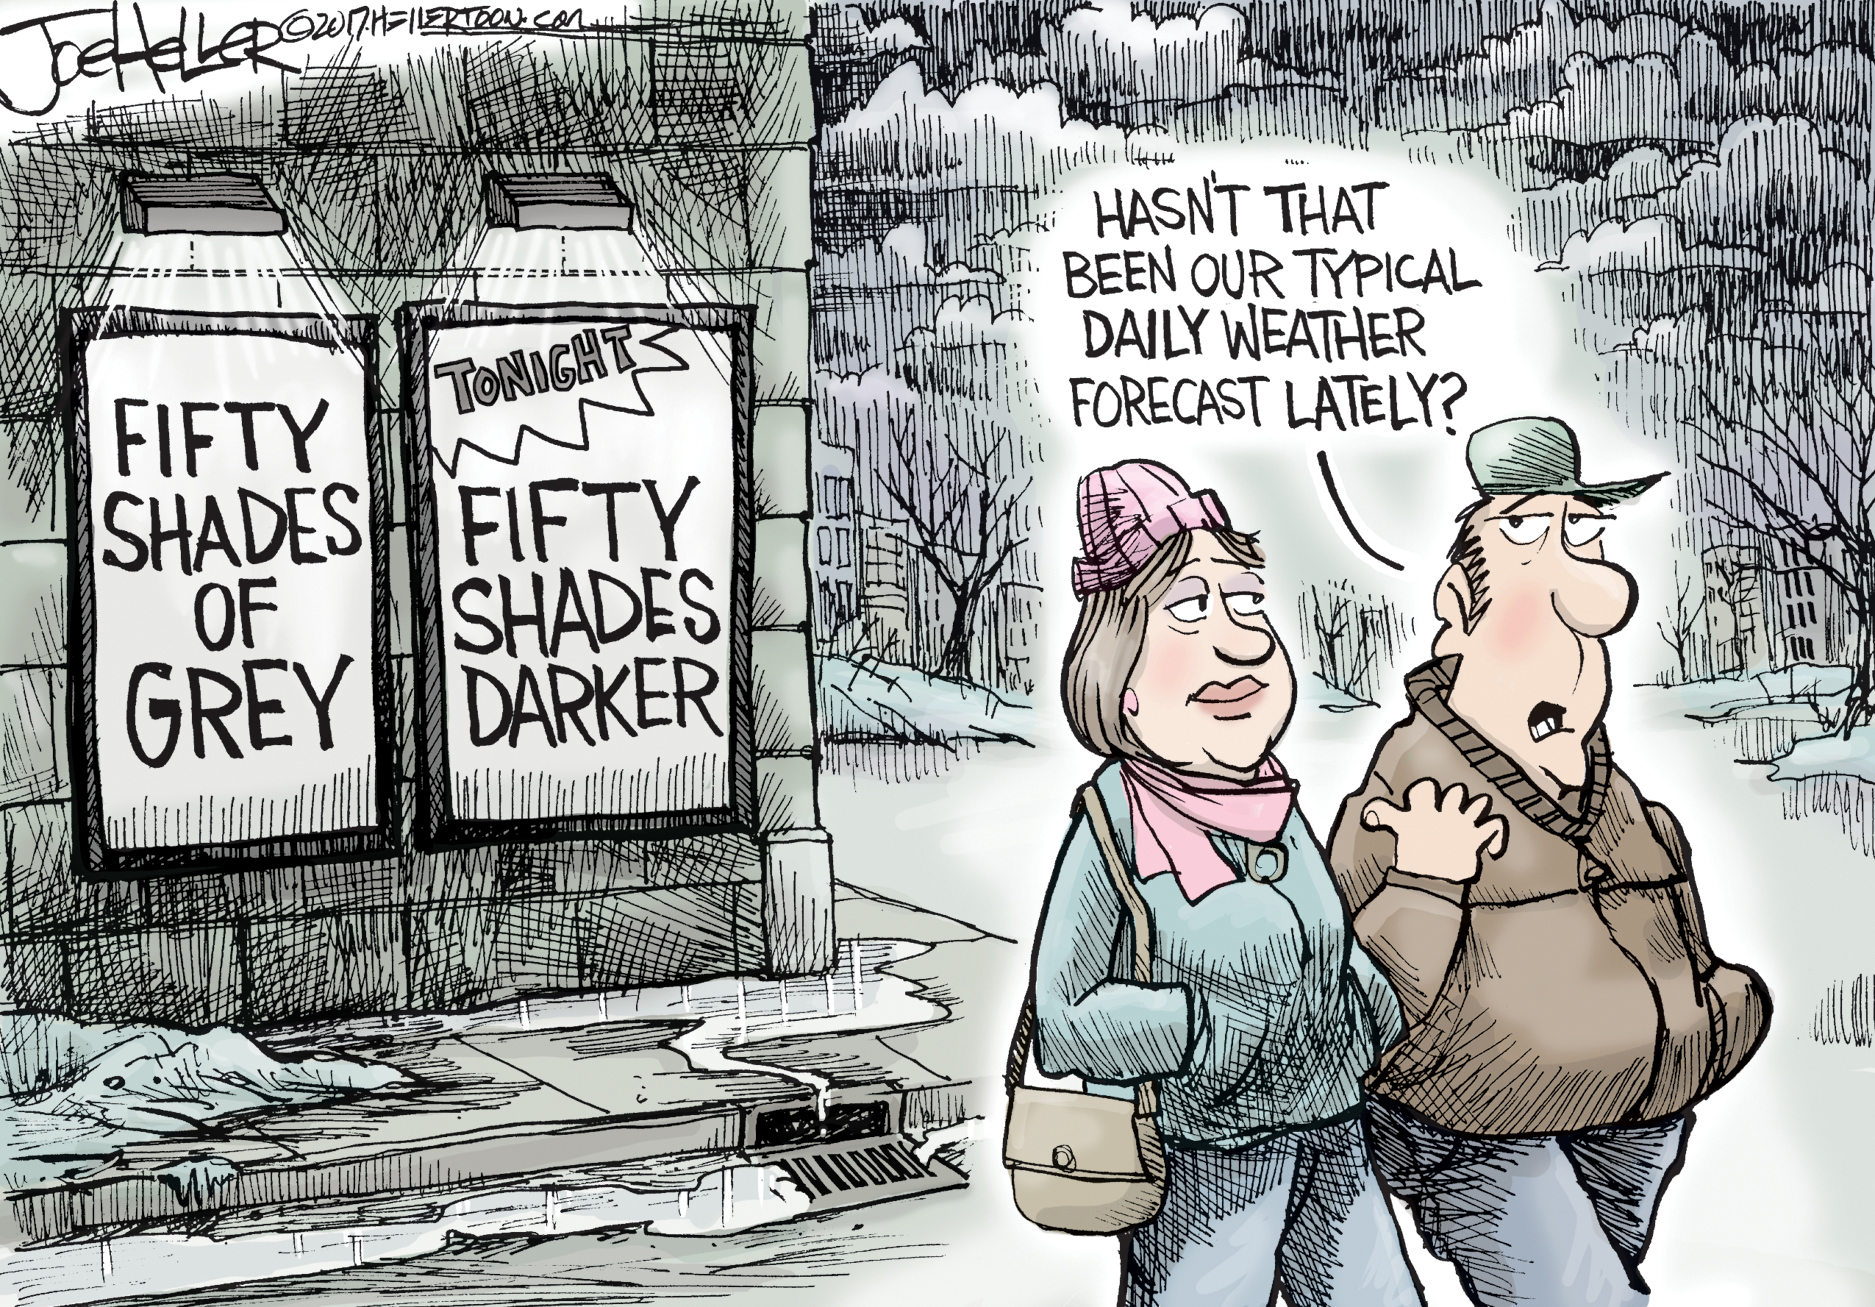 Editorial Cartoon Fifty Shades of Grey Fifty Shades Darker weather